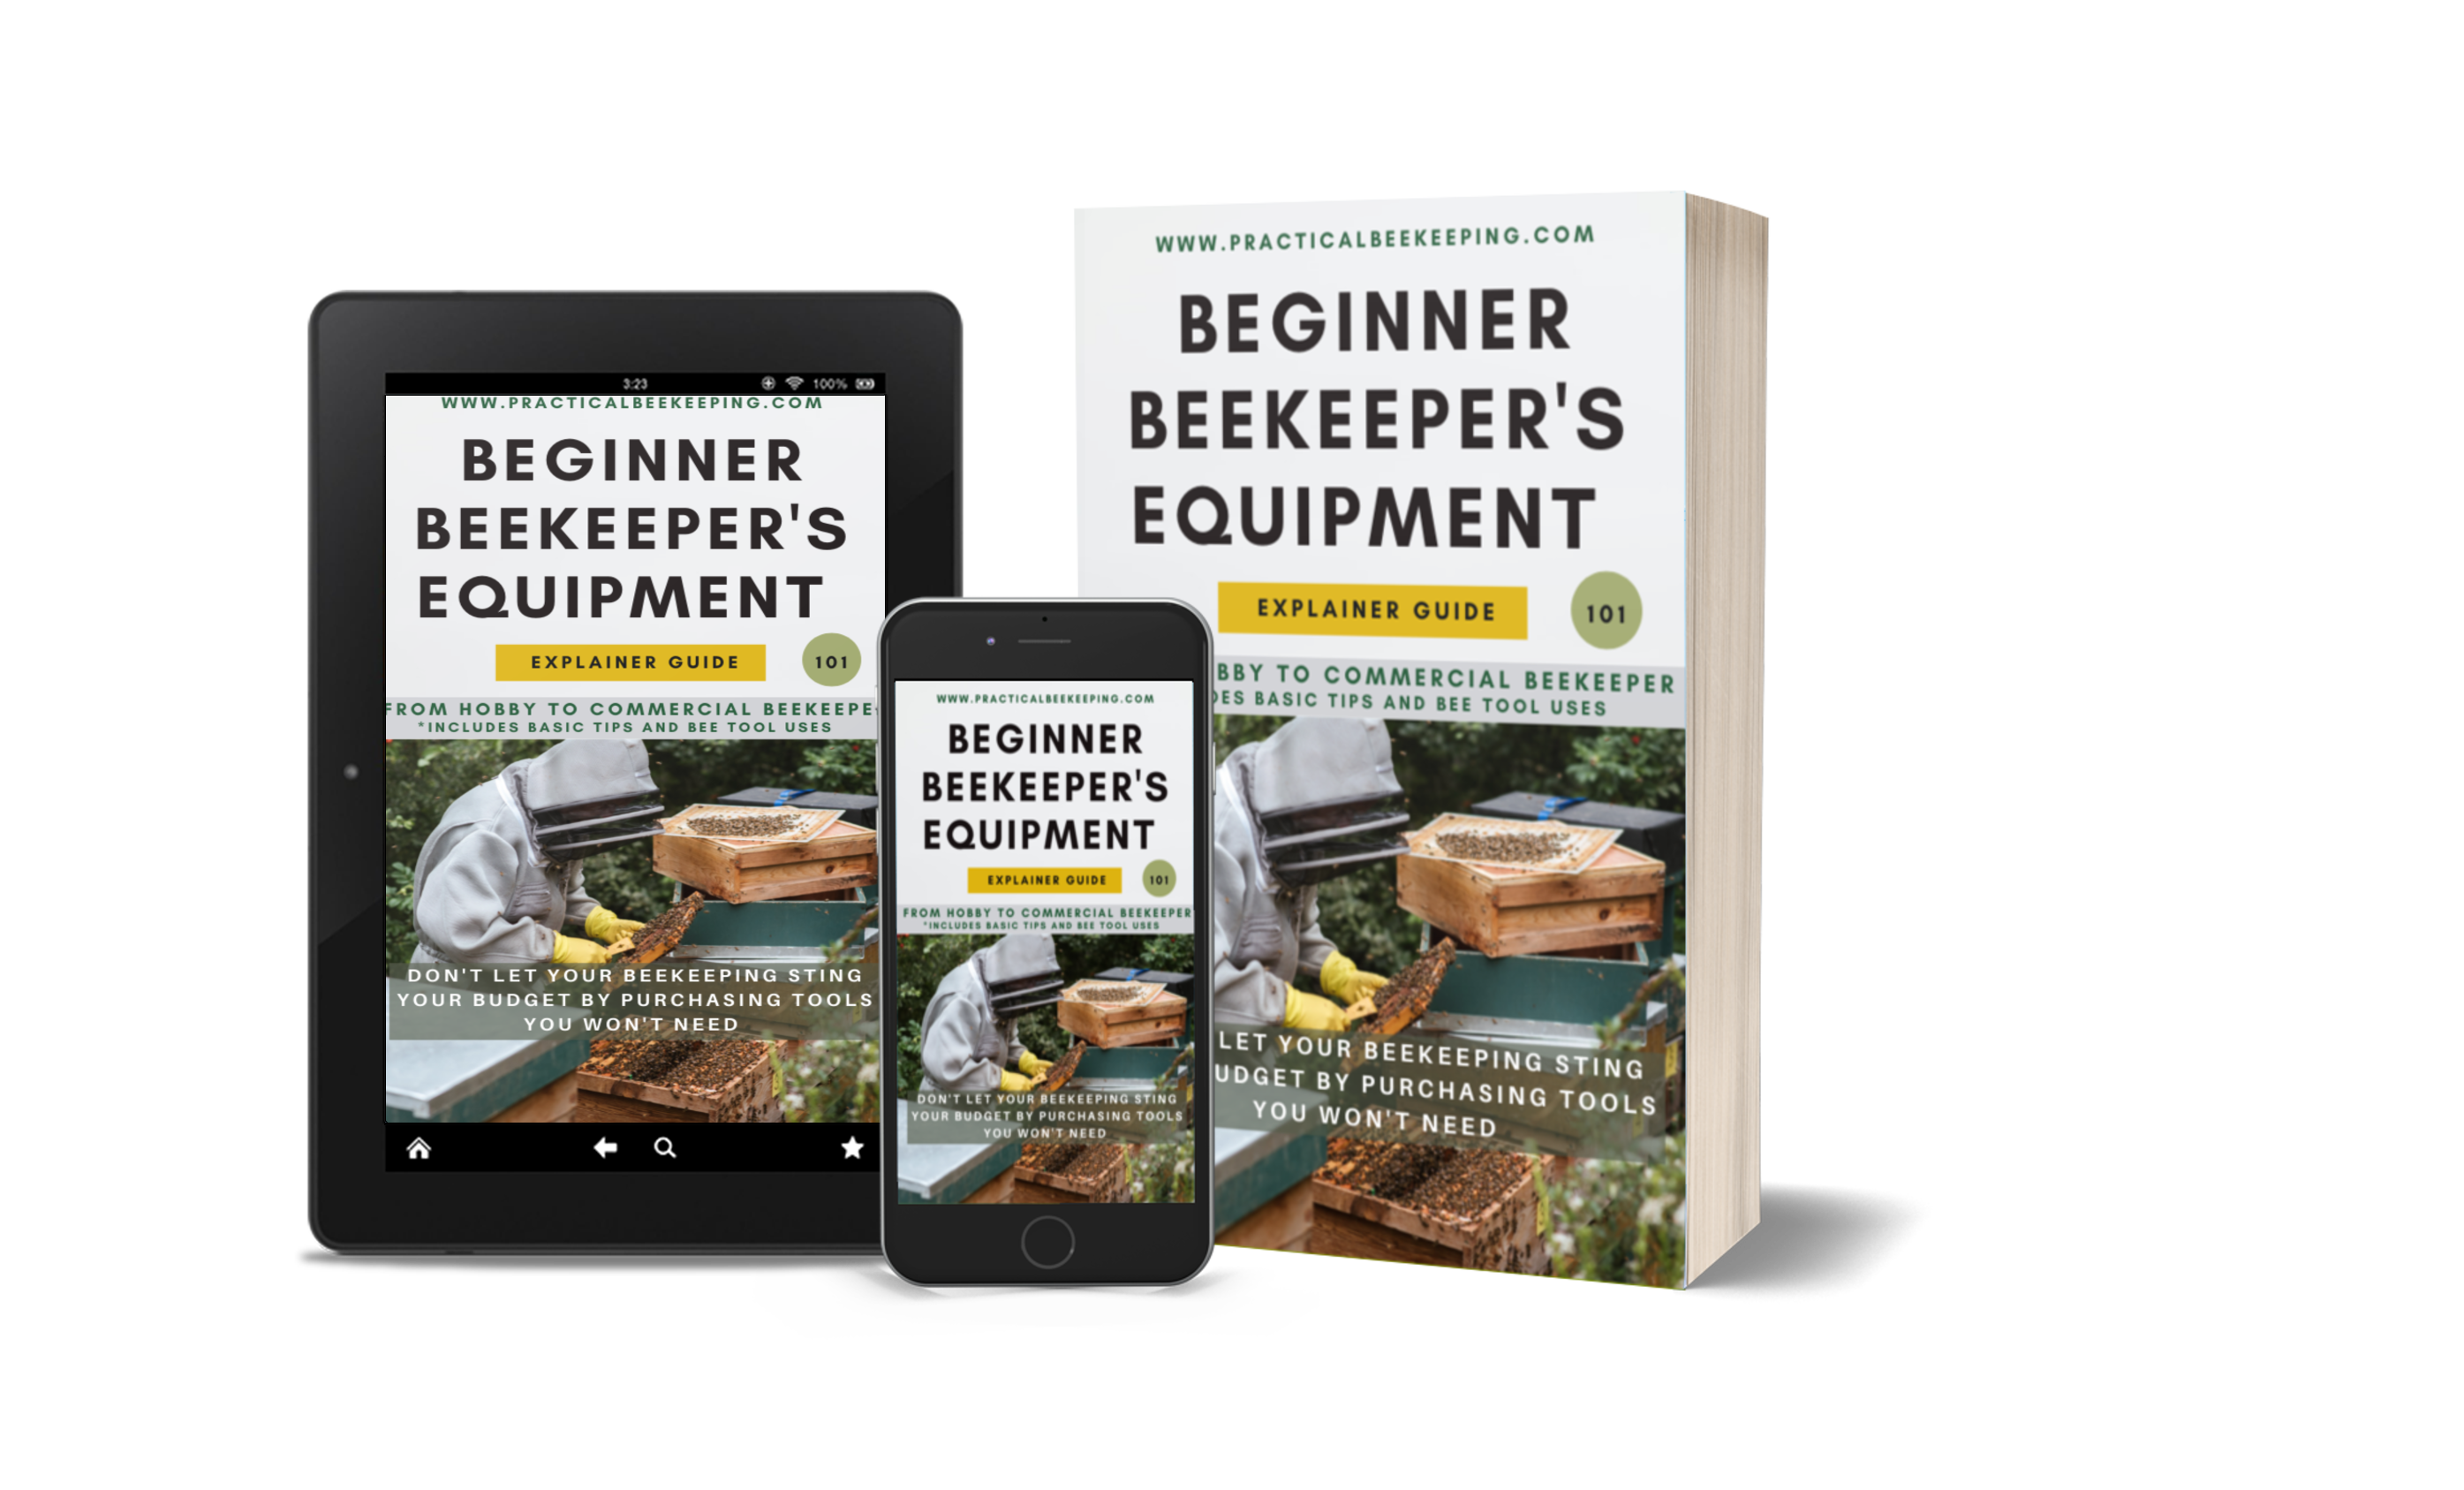 Beginner Beekeeper's Equipment 101 Guide - What Beekeeping Equipment Do I need?